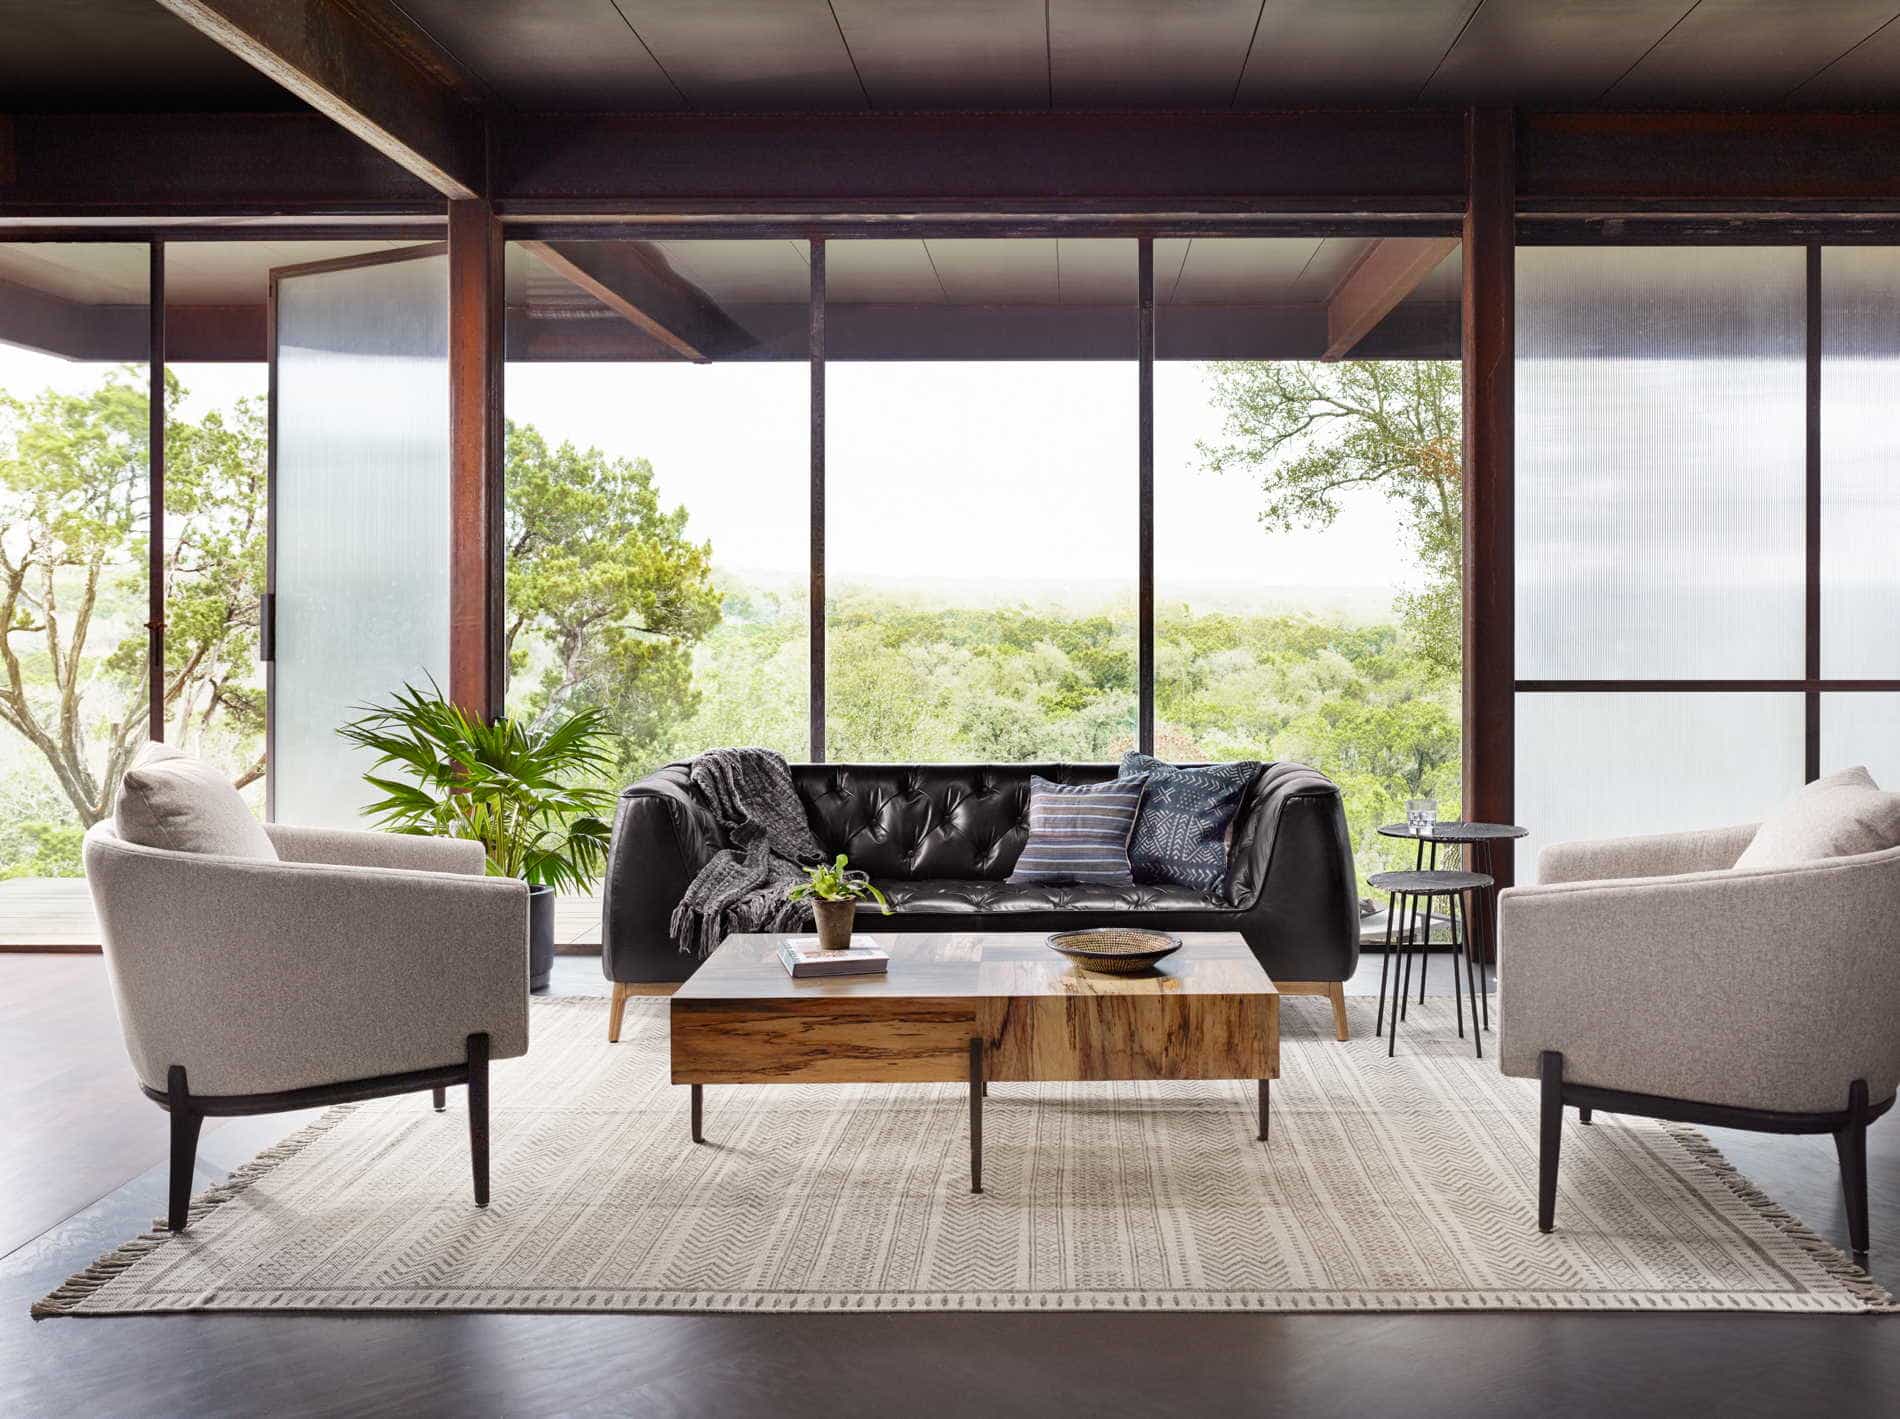 Terra Firma interior designer Krissy Millner share curvy furniture tips for creating cozy spaces.